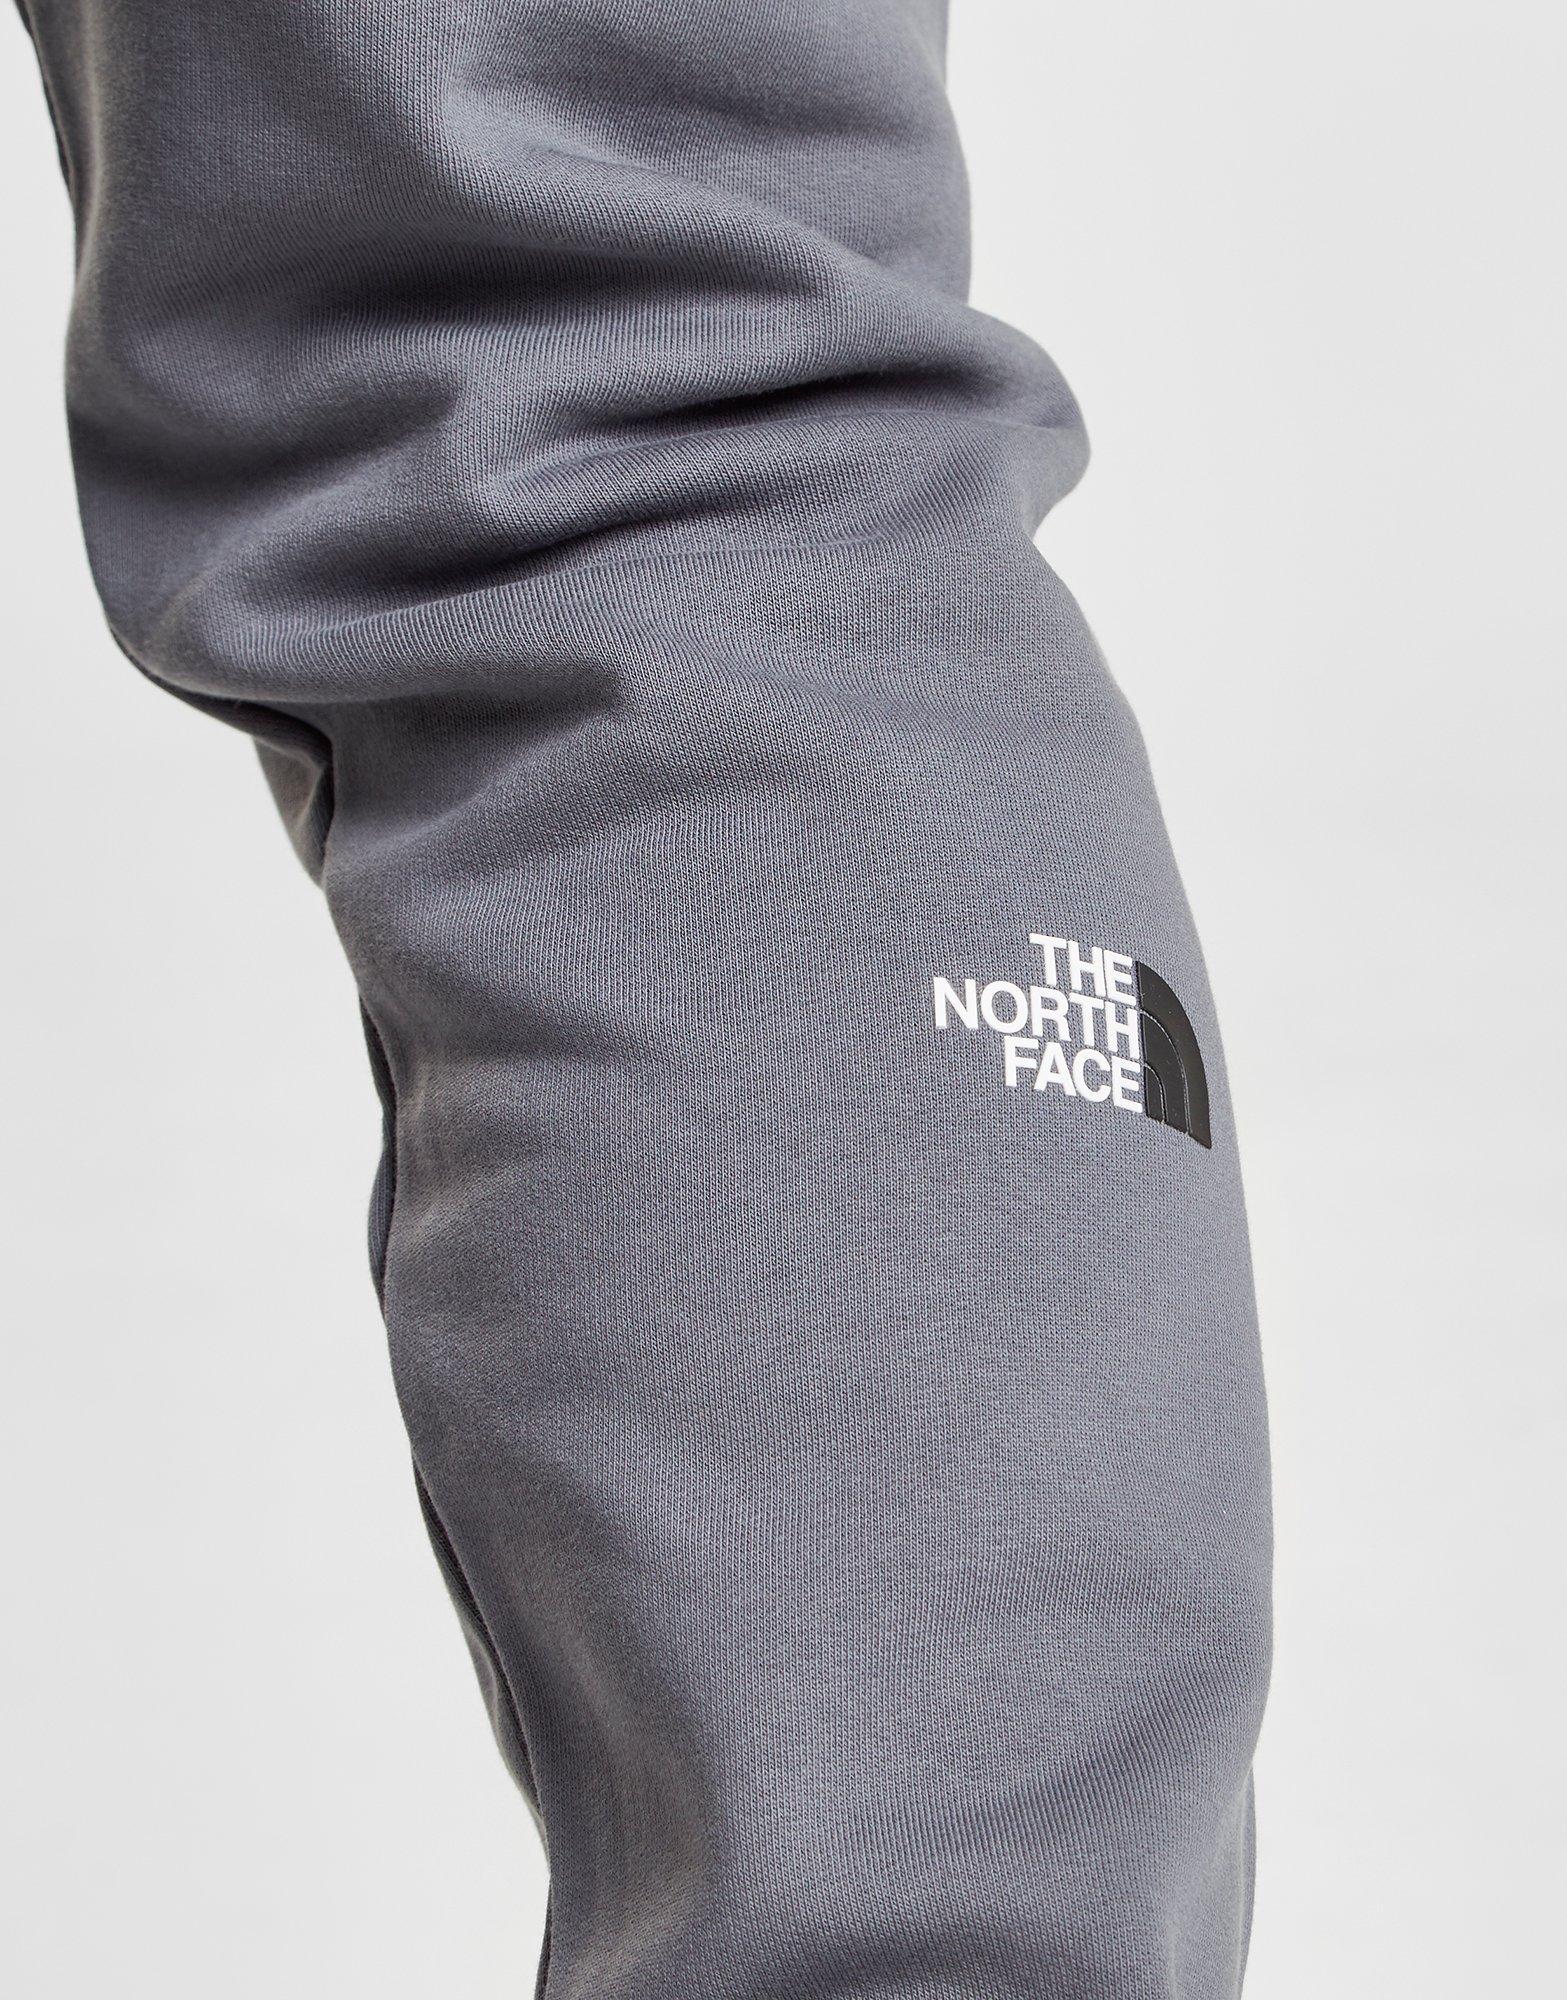 The North Face Bondi Fleece Track Pants in Gray for Men - Lyst